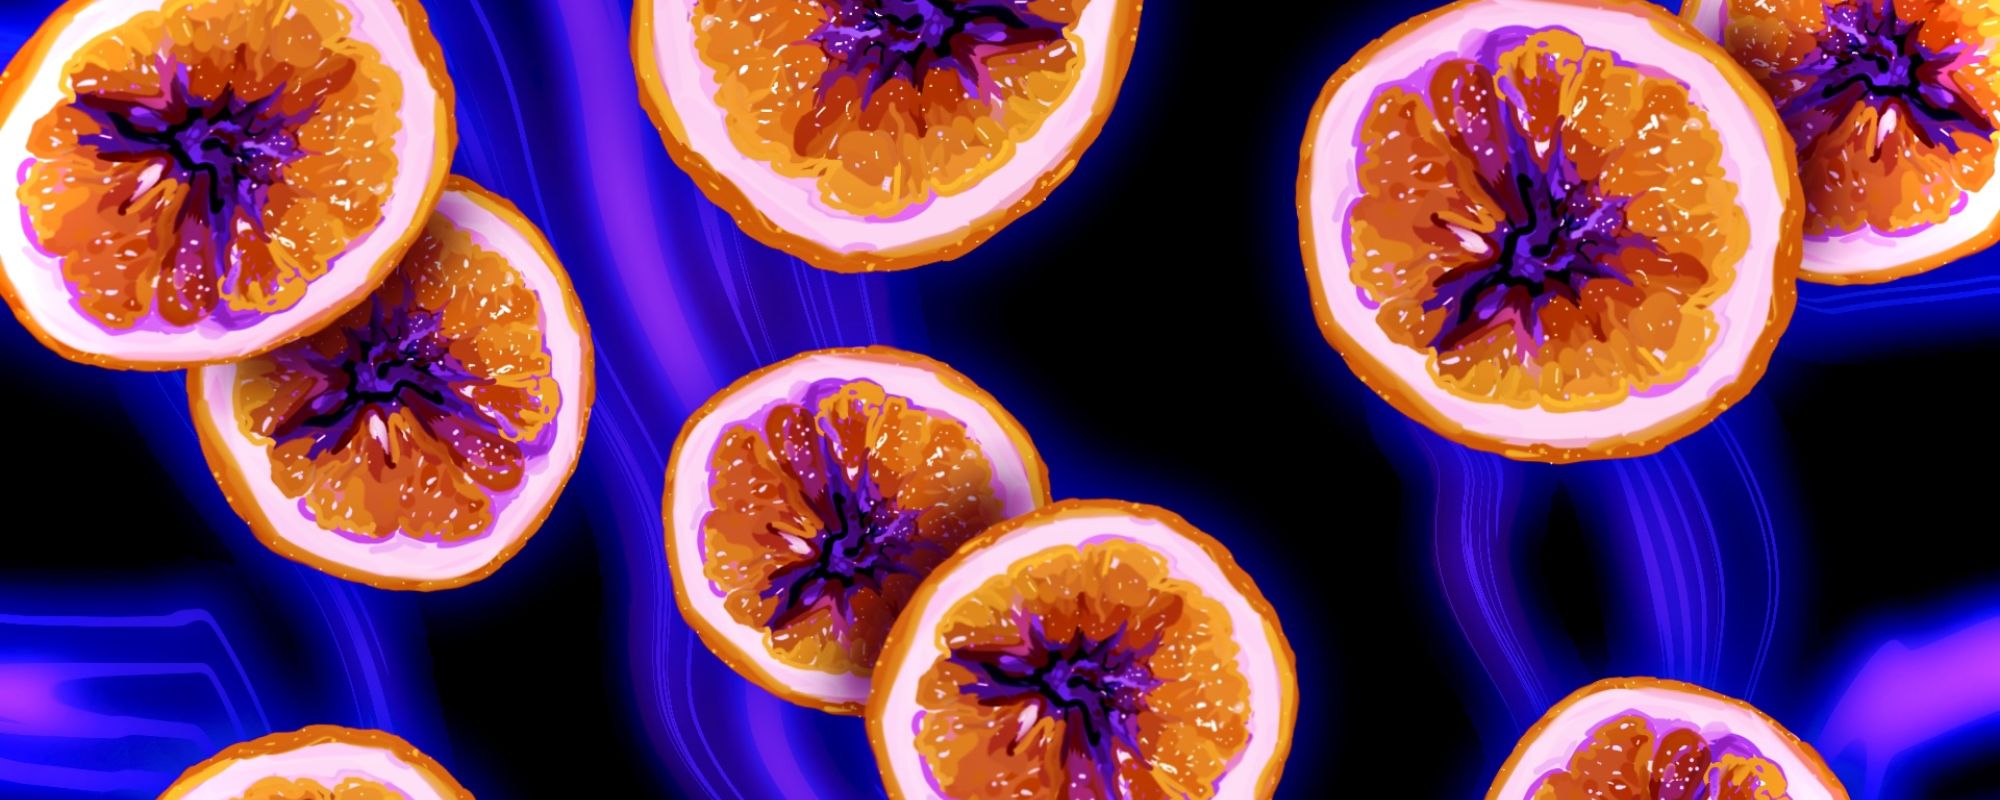 oranges on blue background